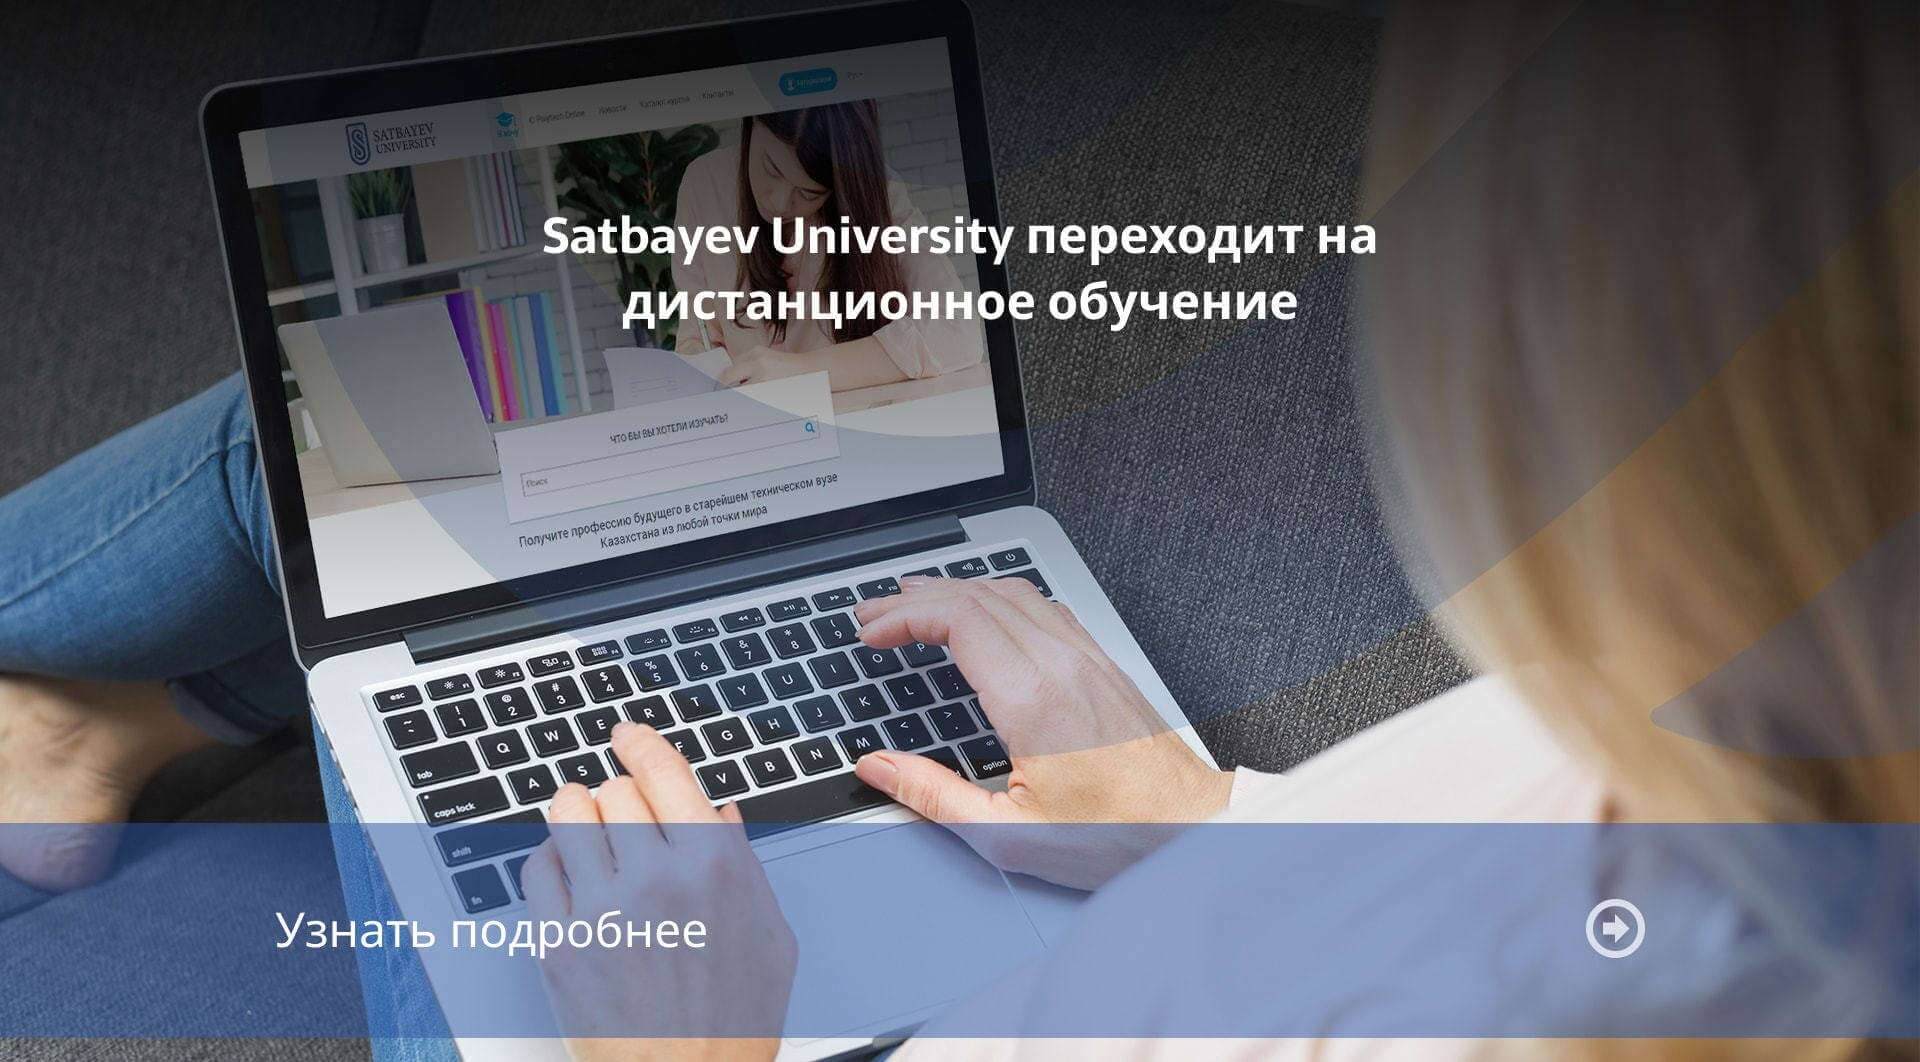 Satbayev University online learning